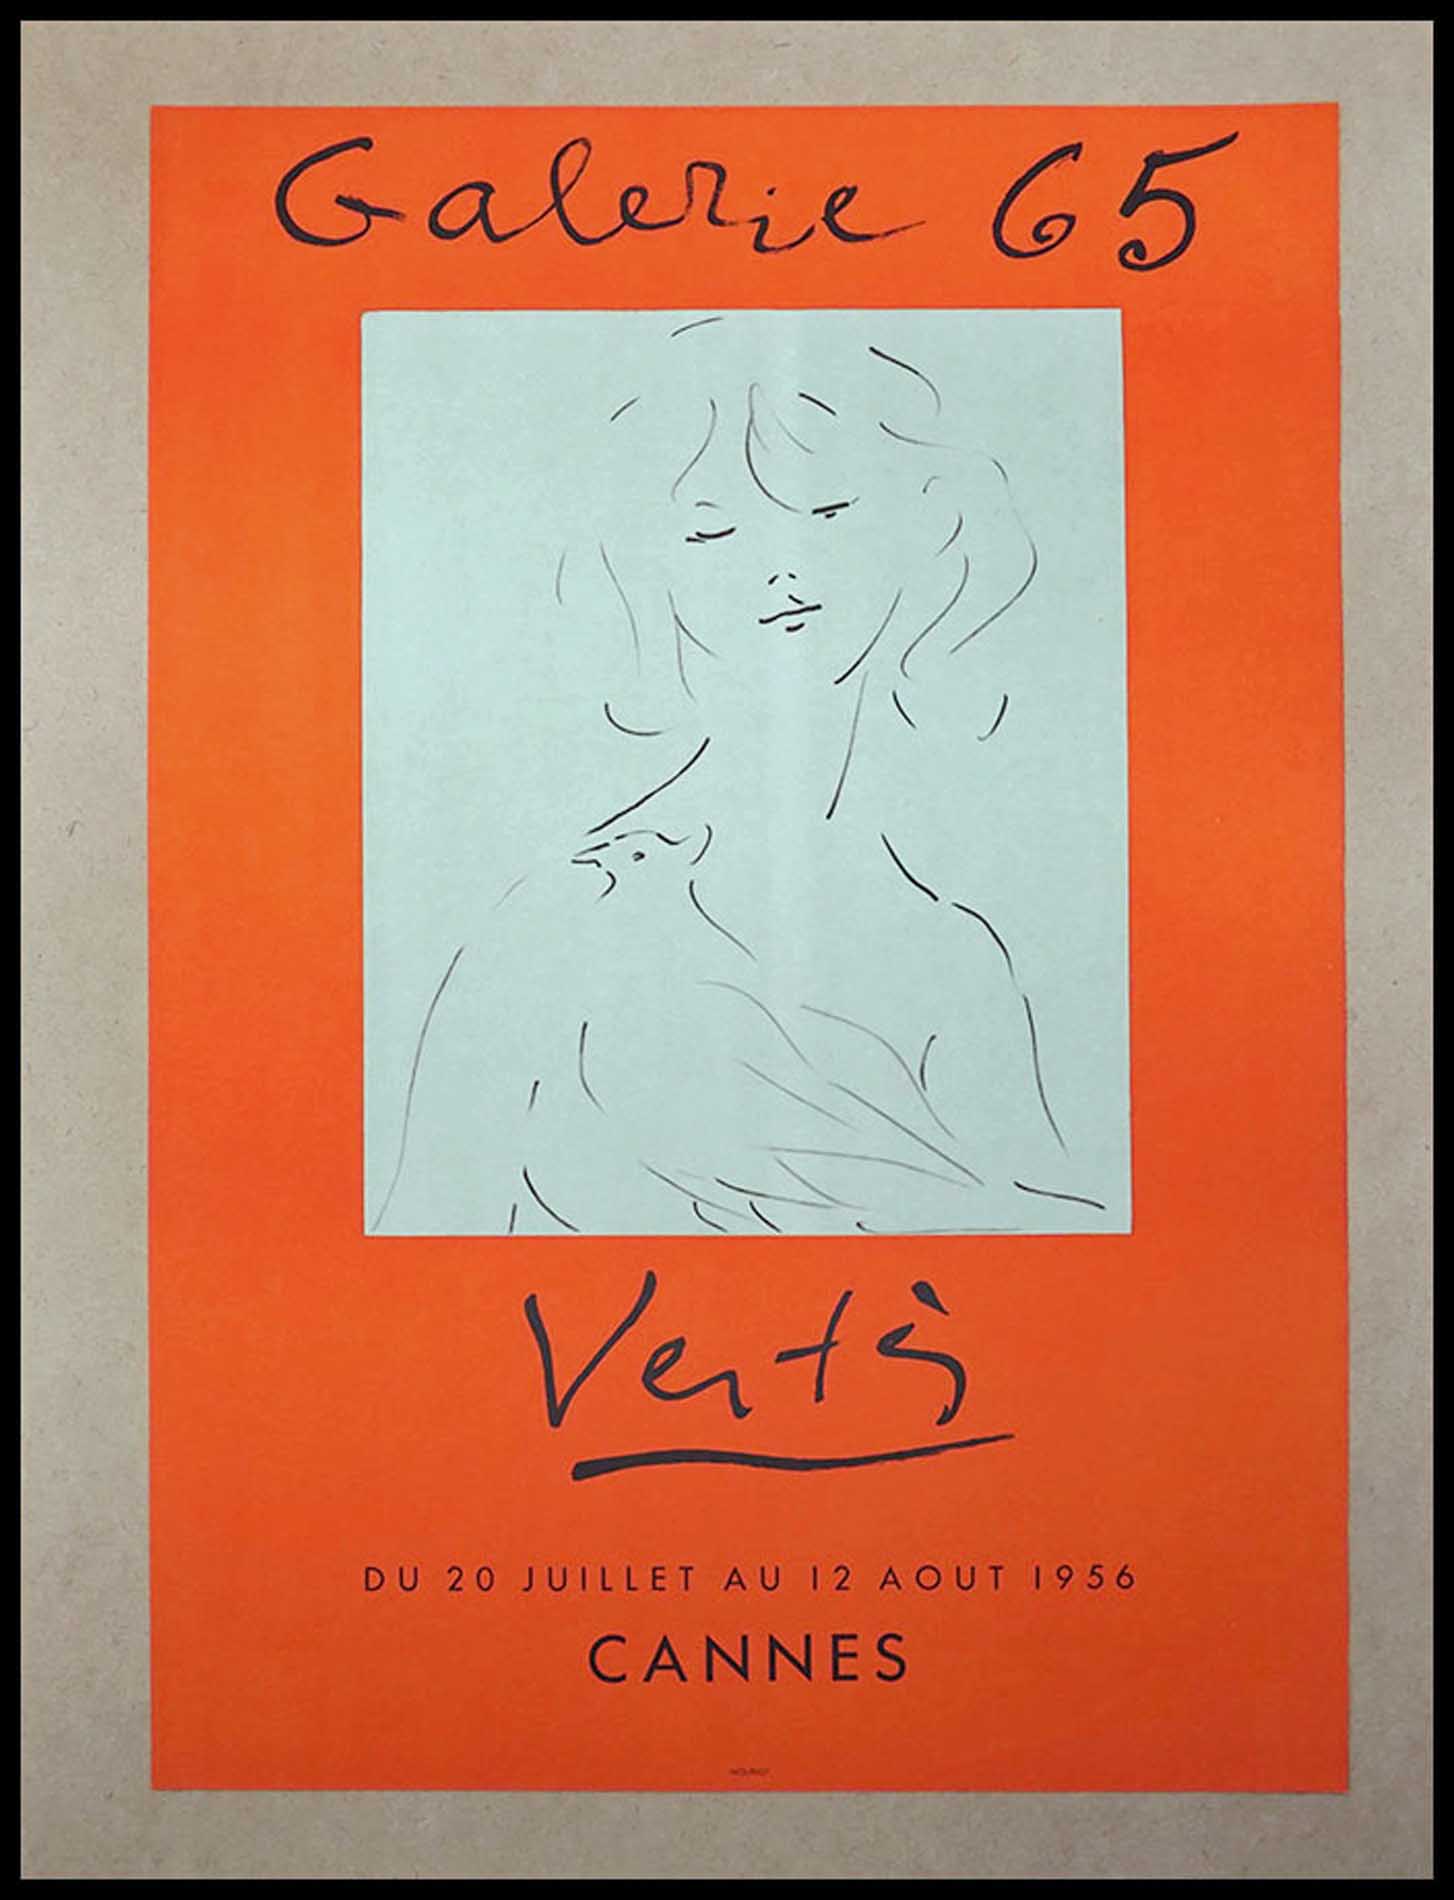 Vertes, Galerie 65, Cannes